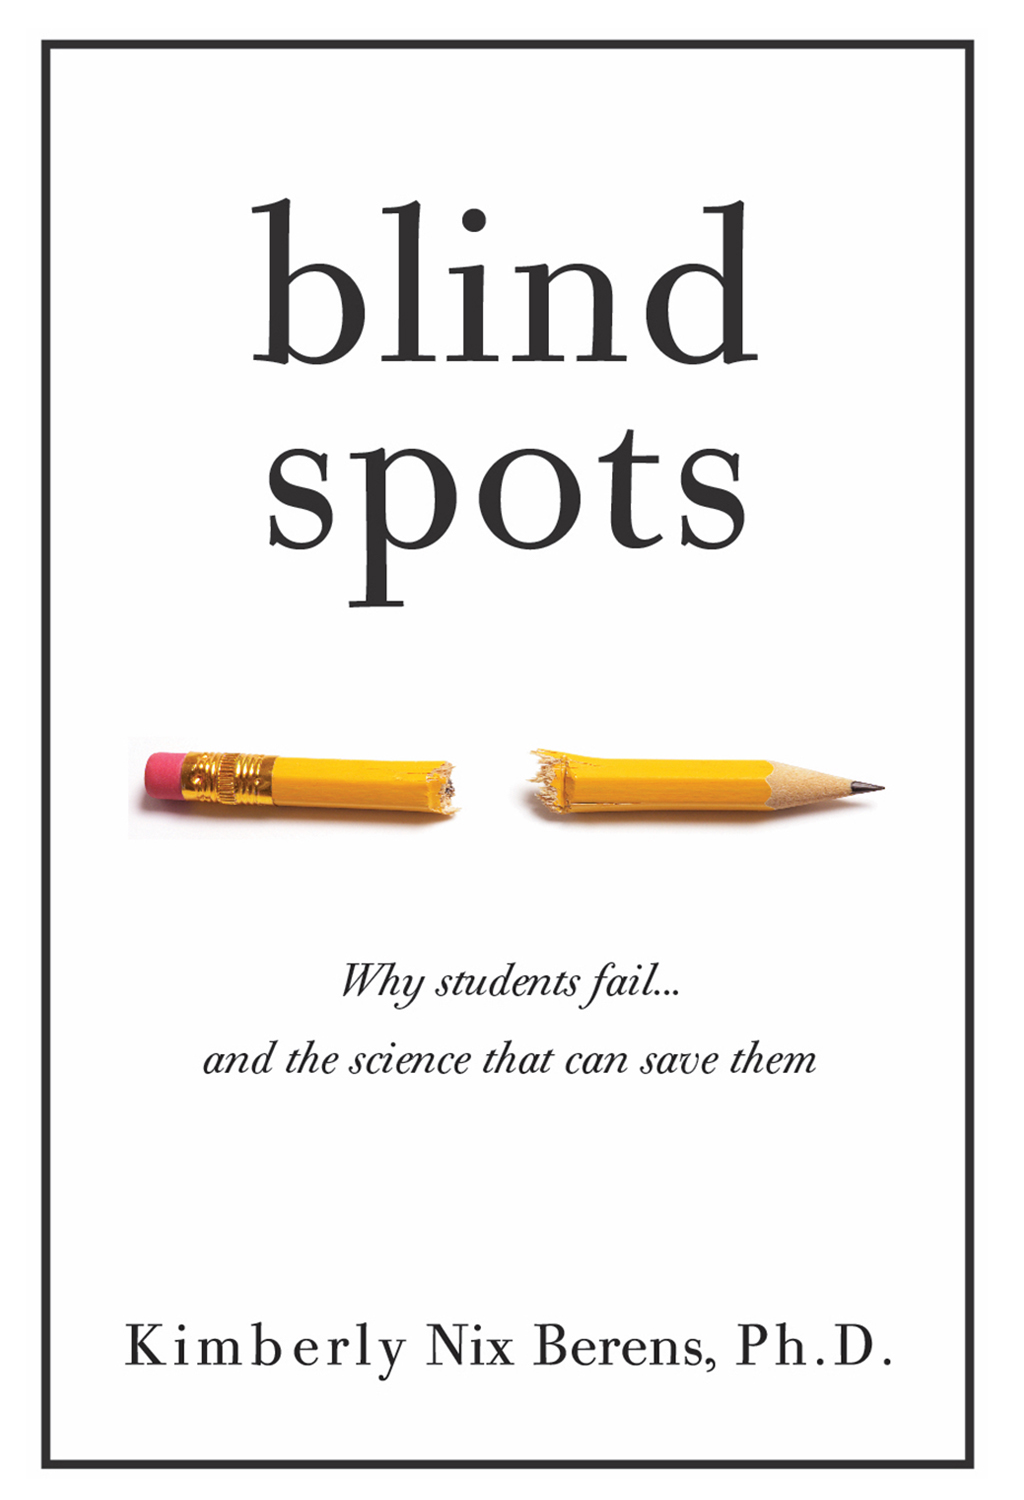 Blind spot. Failed student. Blind book.